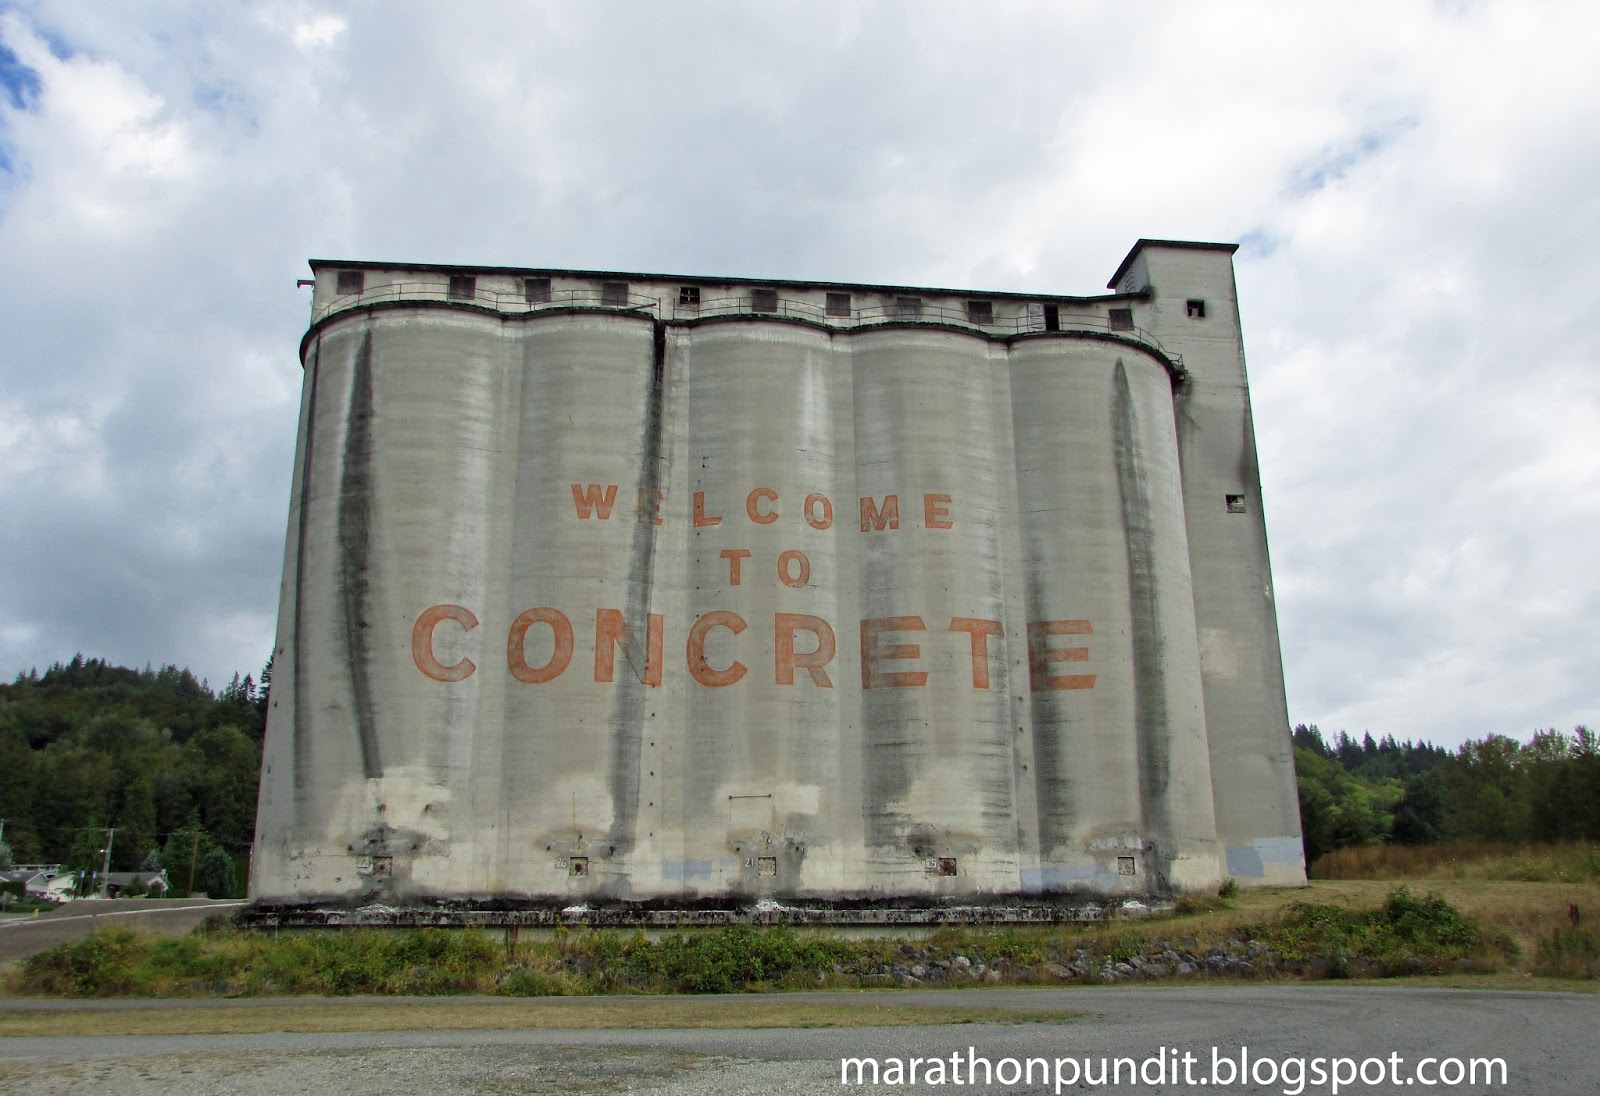 Marathon Pundit: (Photos) Concrete, Washington